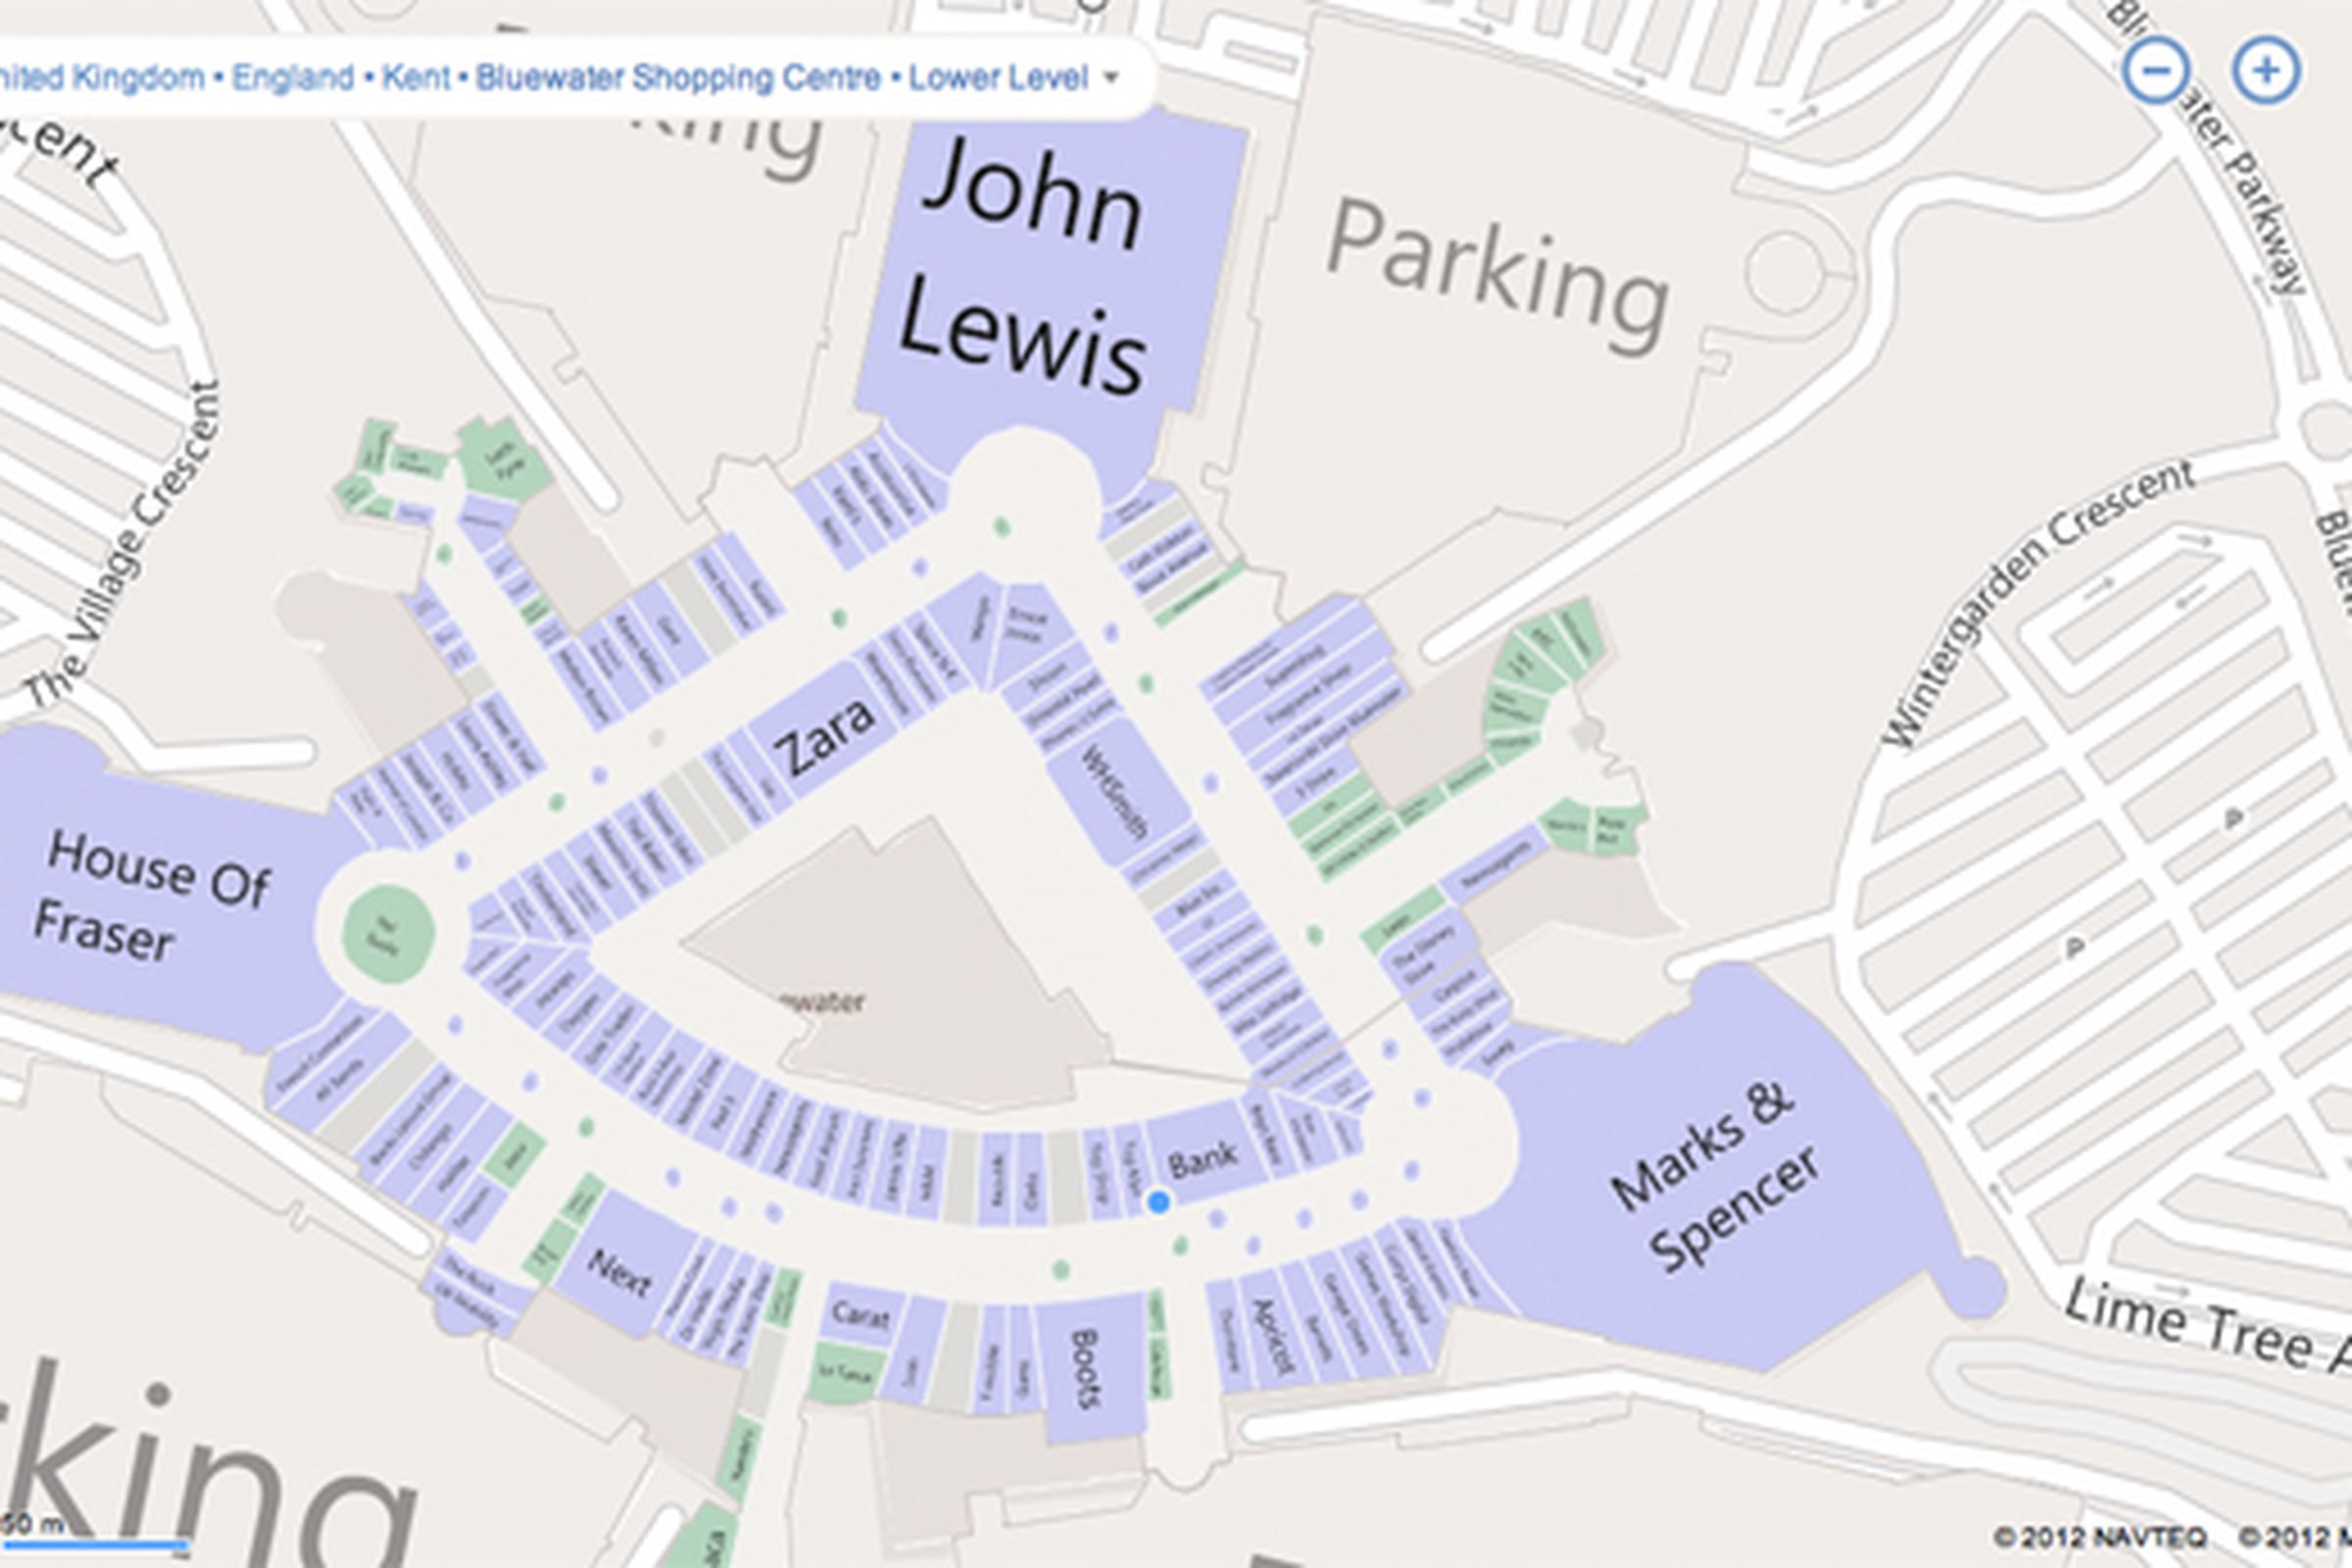 Bing Maps venues